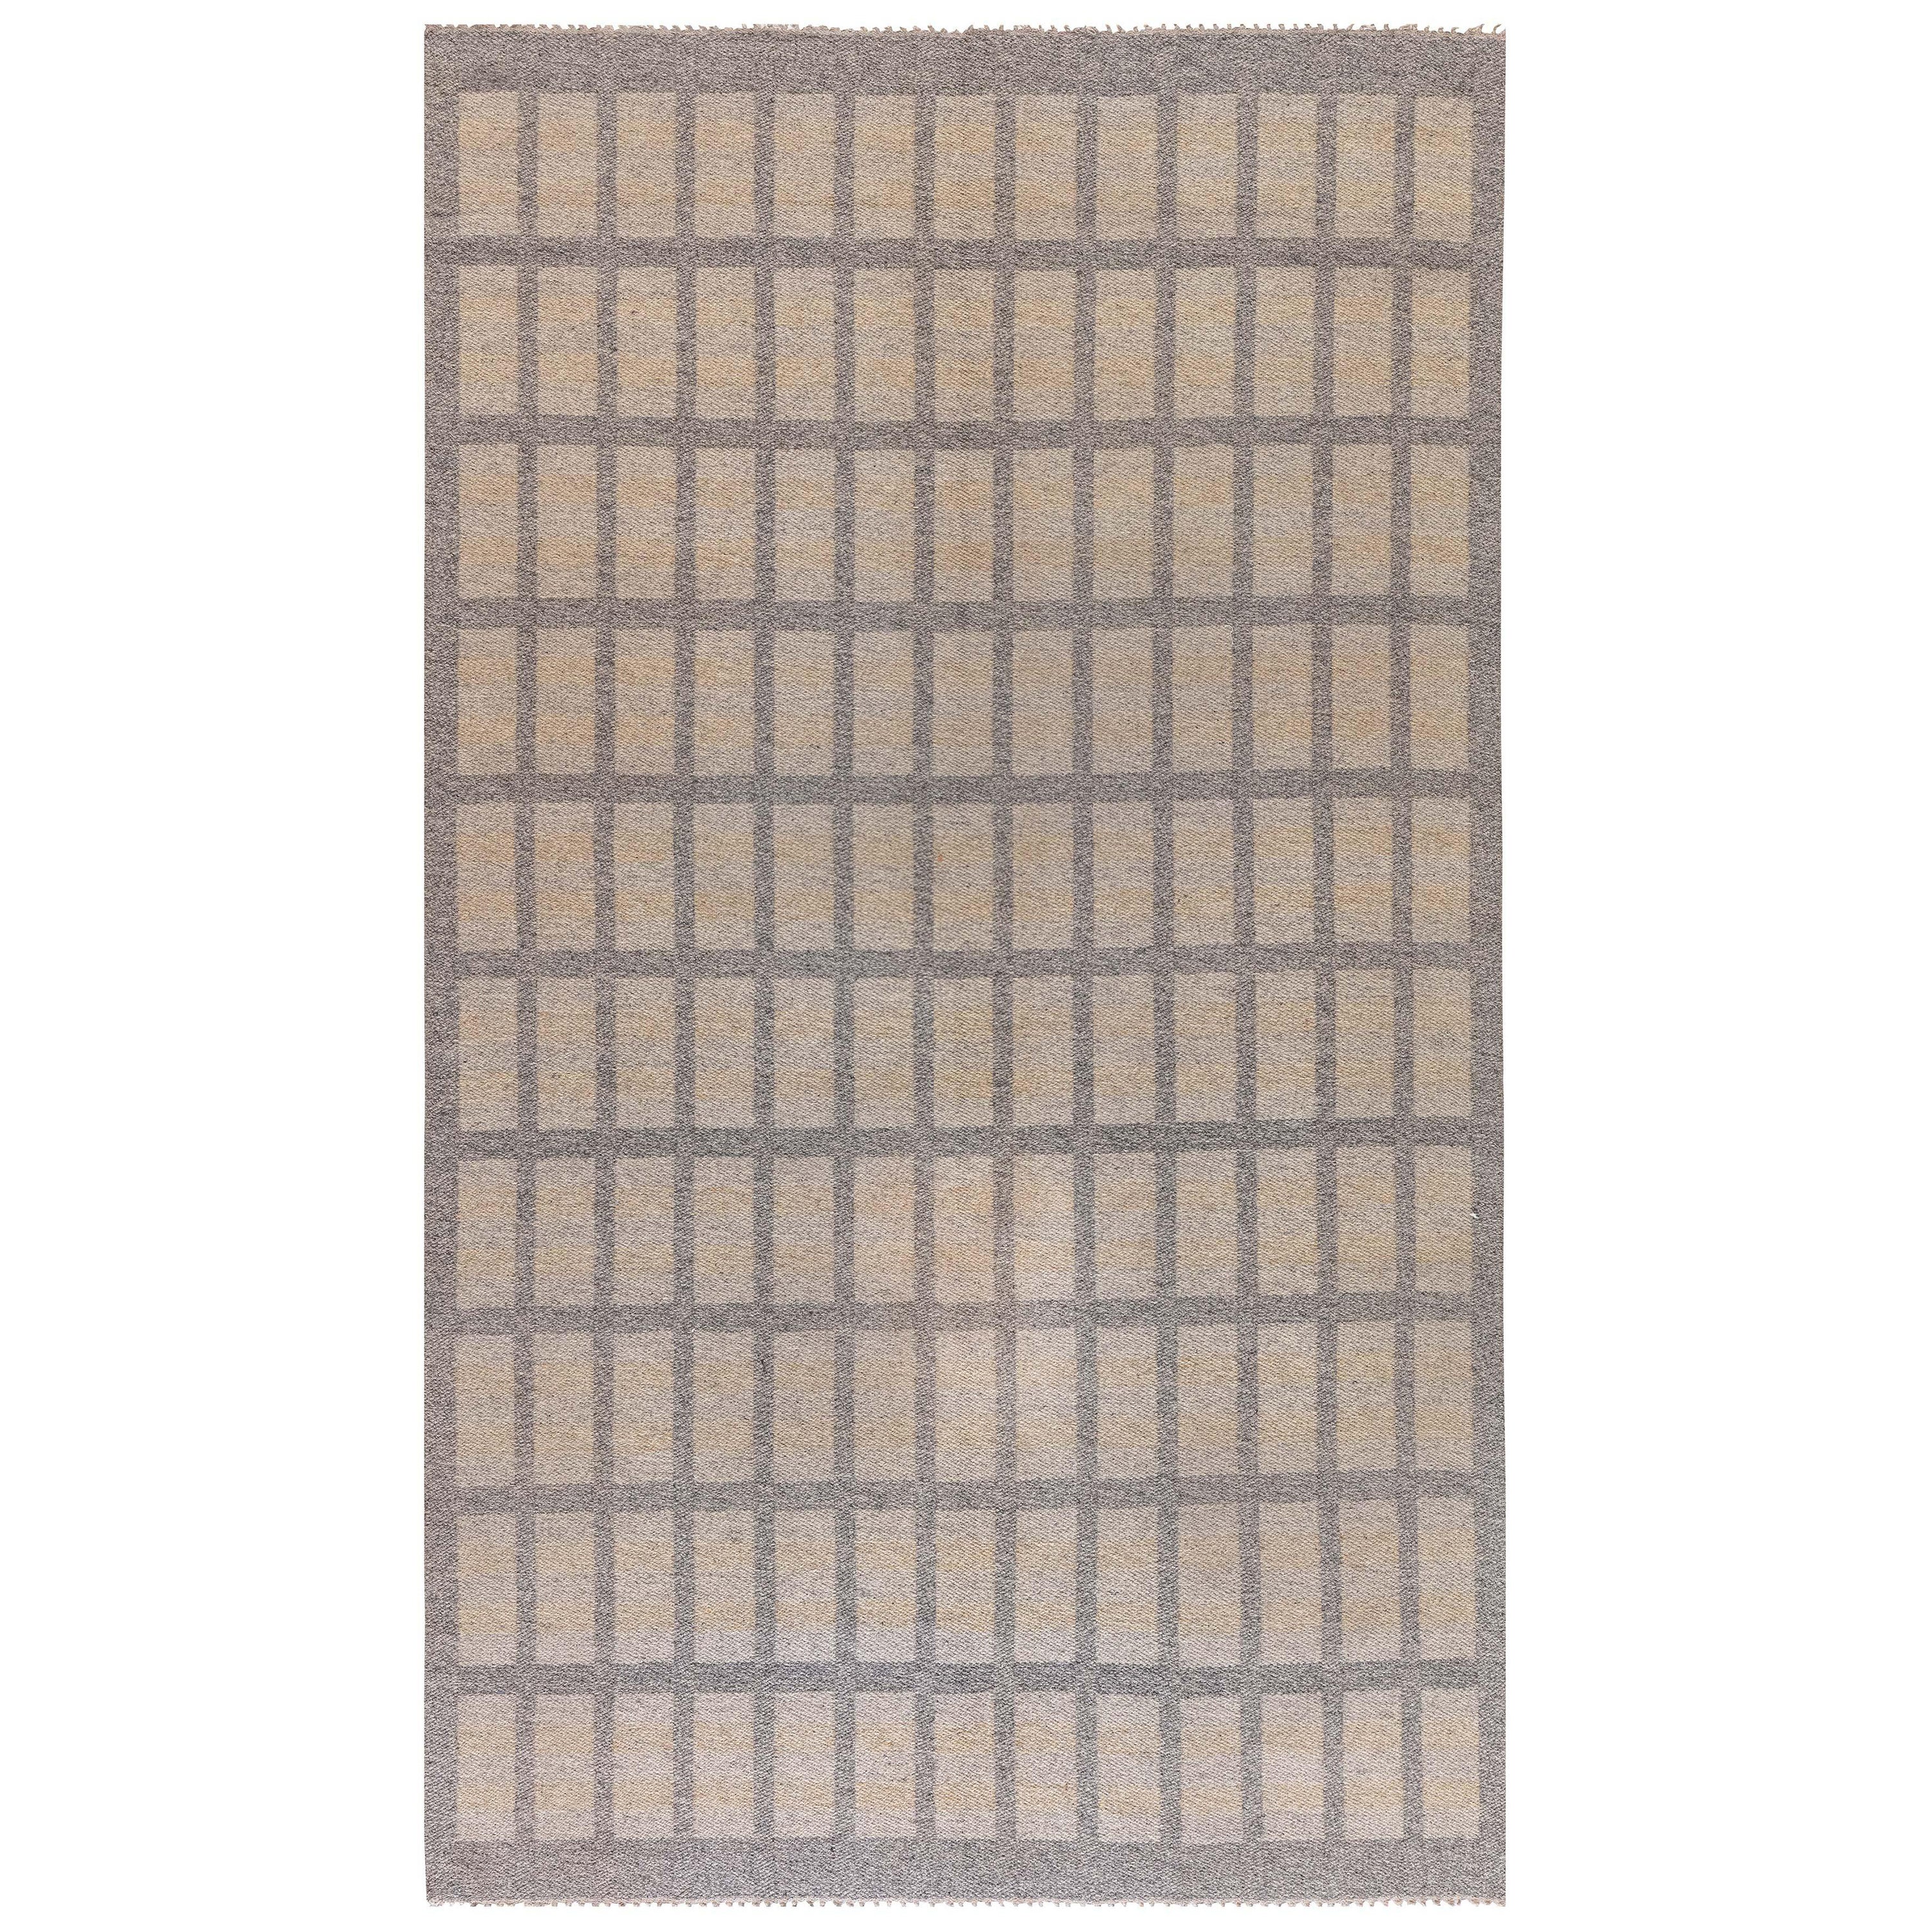 Mid Century Swedish double sided flat weave rug